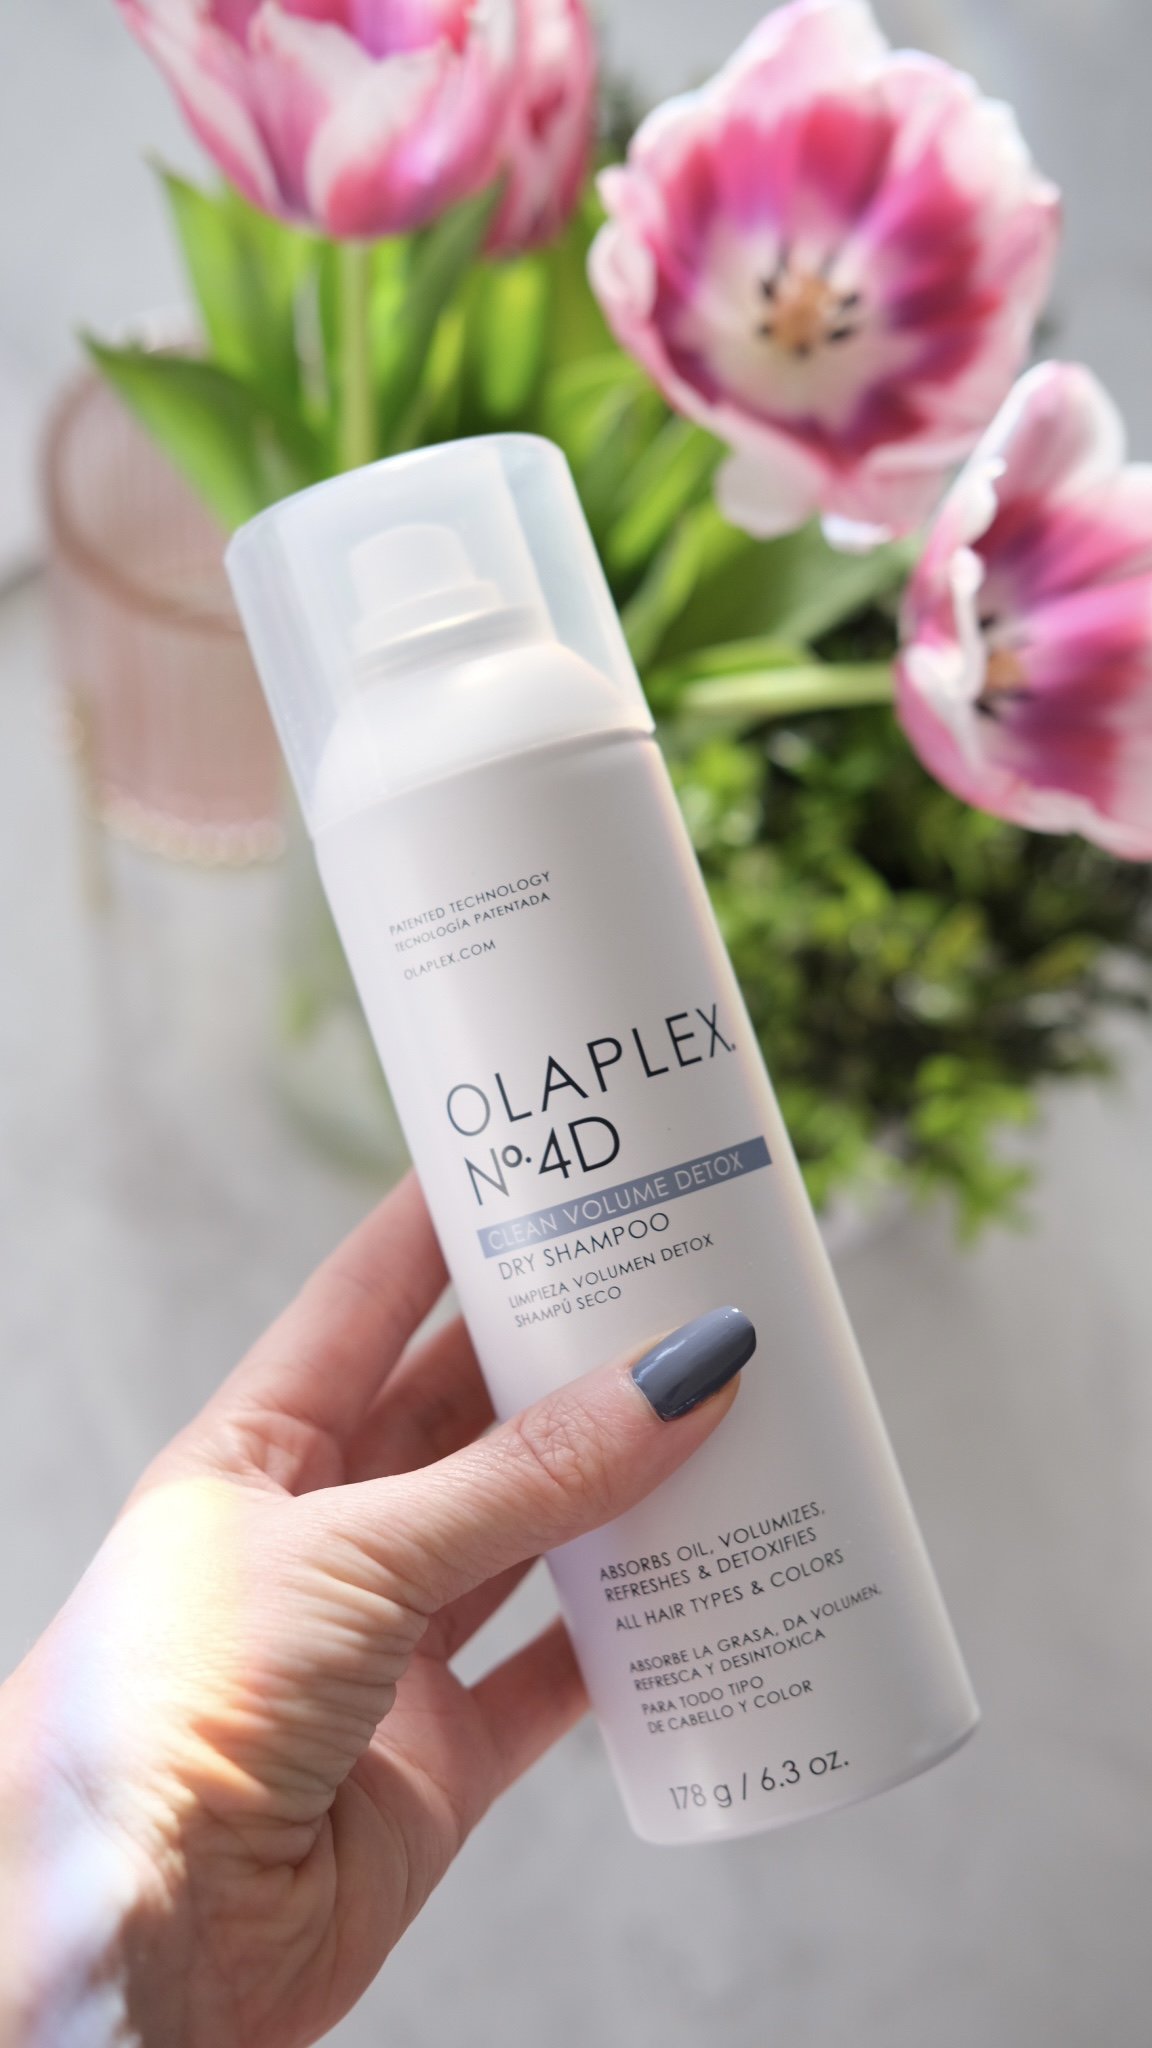 Olaplex 4d reviews and Olaplex dry shampoo reviews. How to use Olaplex 4D